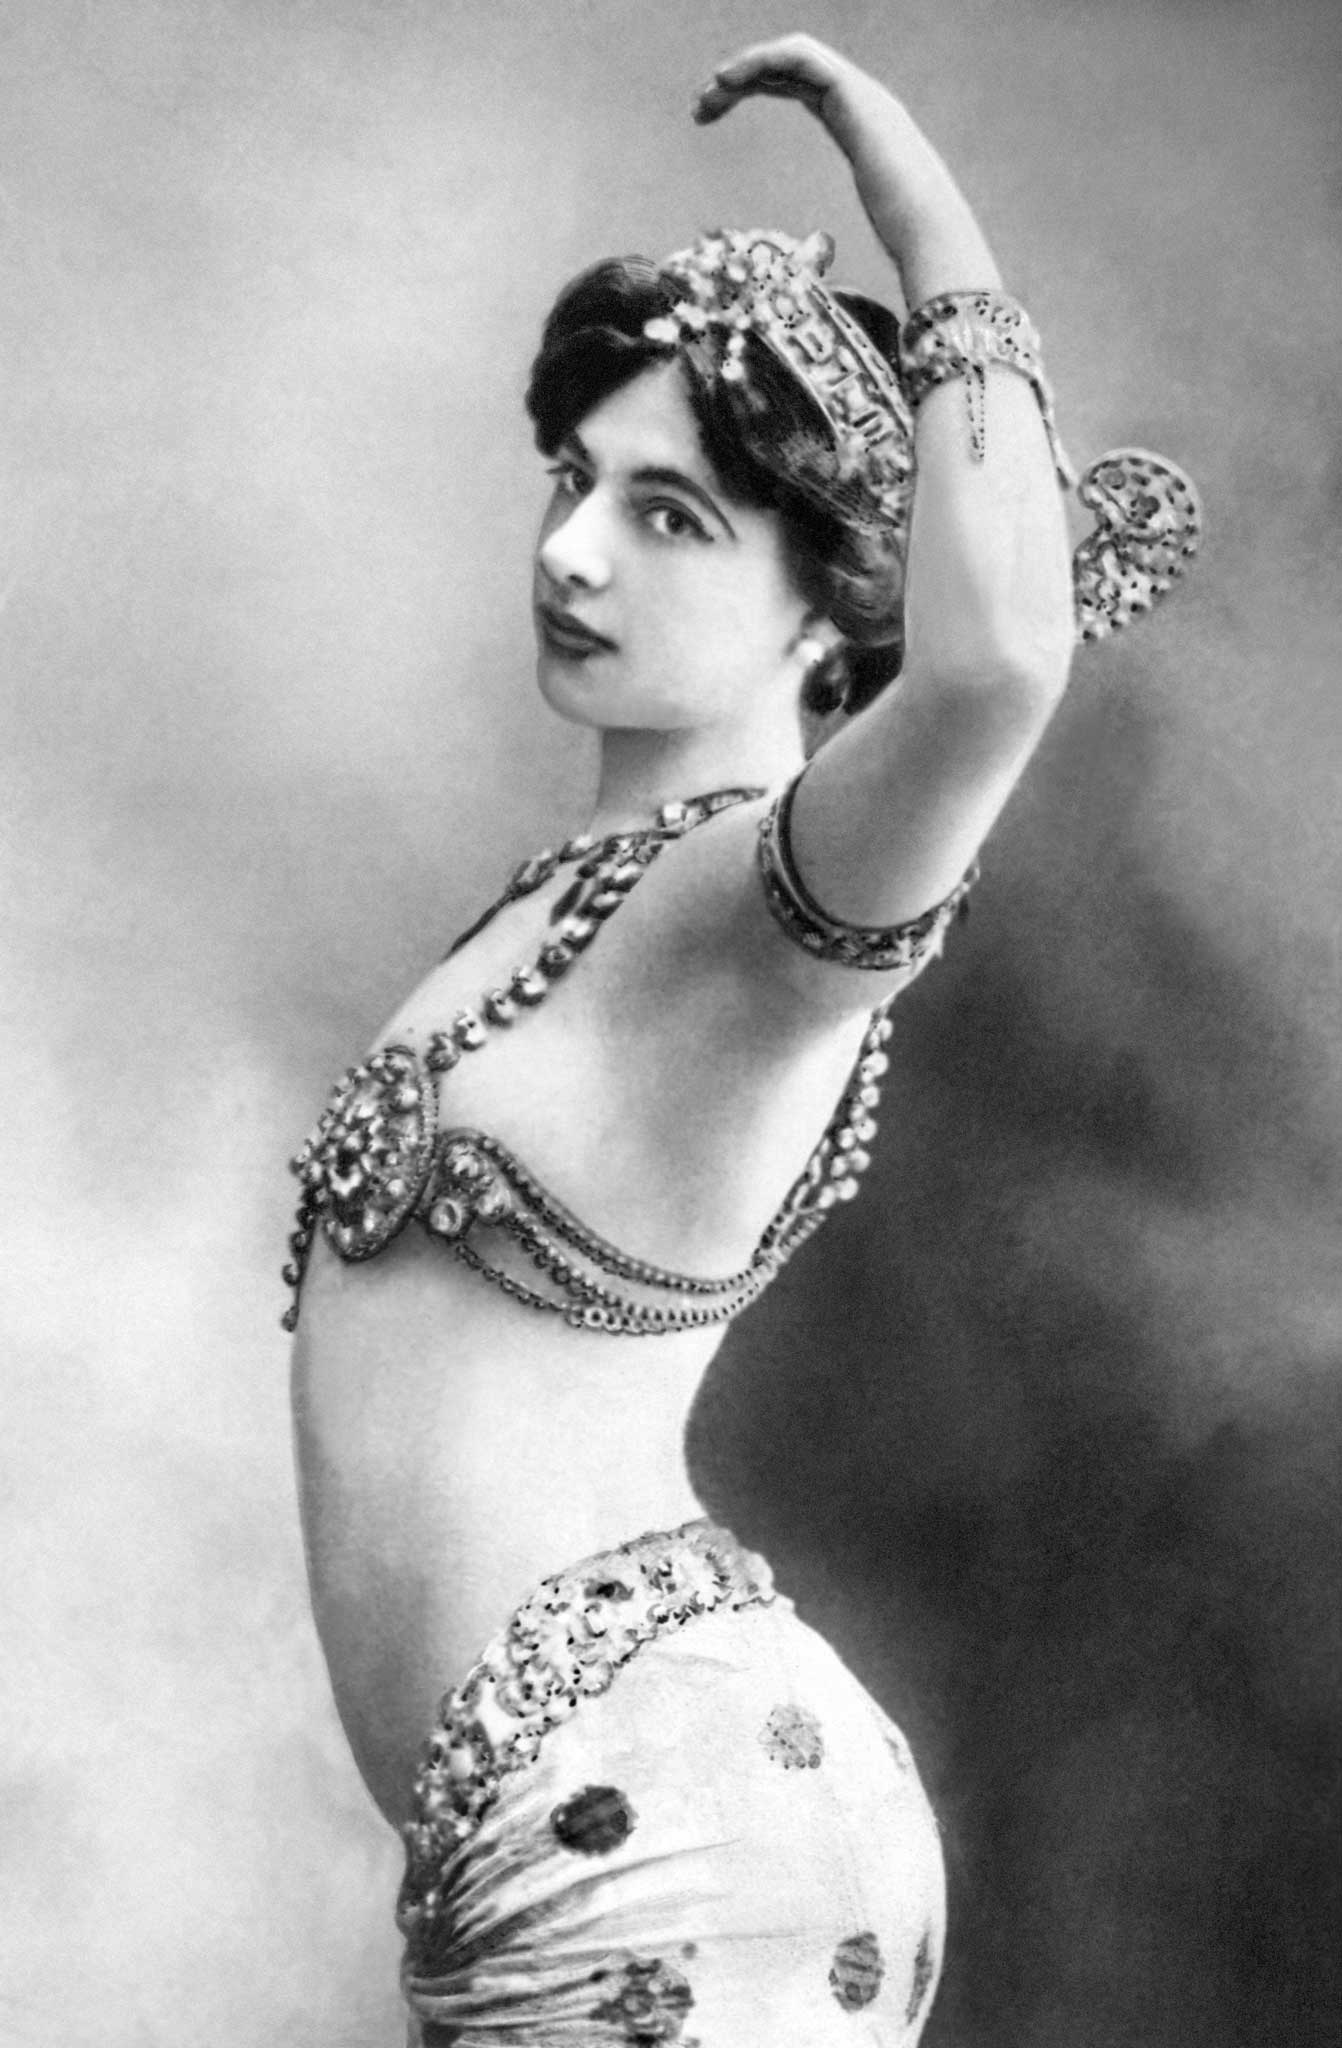 The art of espionage: spy and exotic dancer Mata Hari